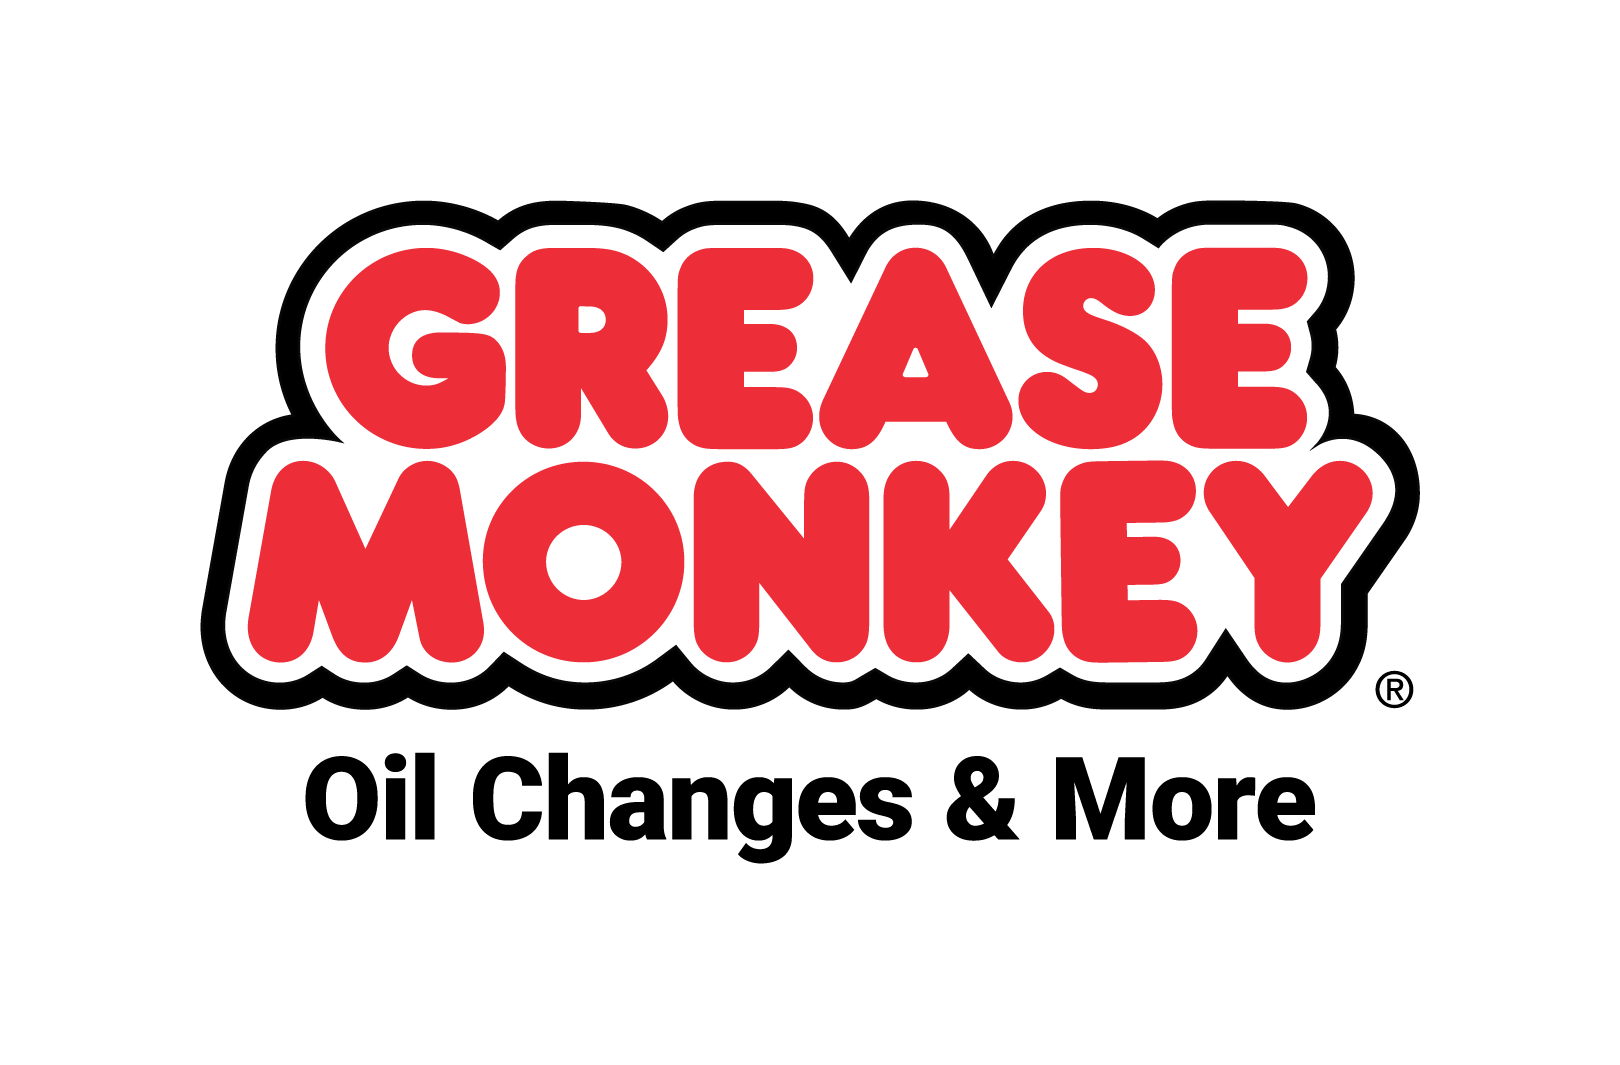 Grease Monkey games. Get big shop